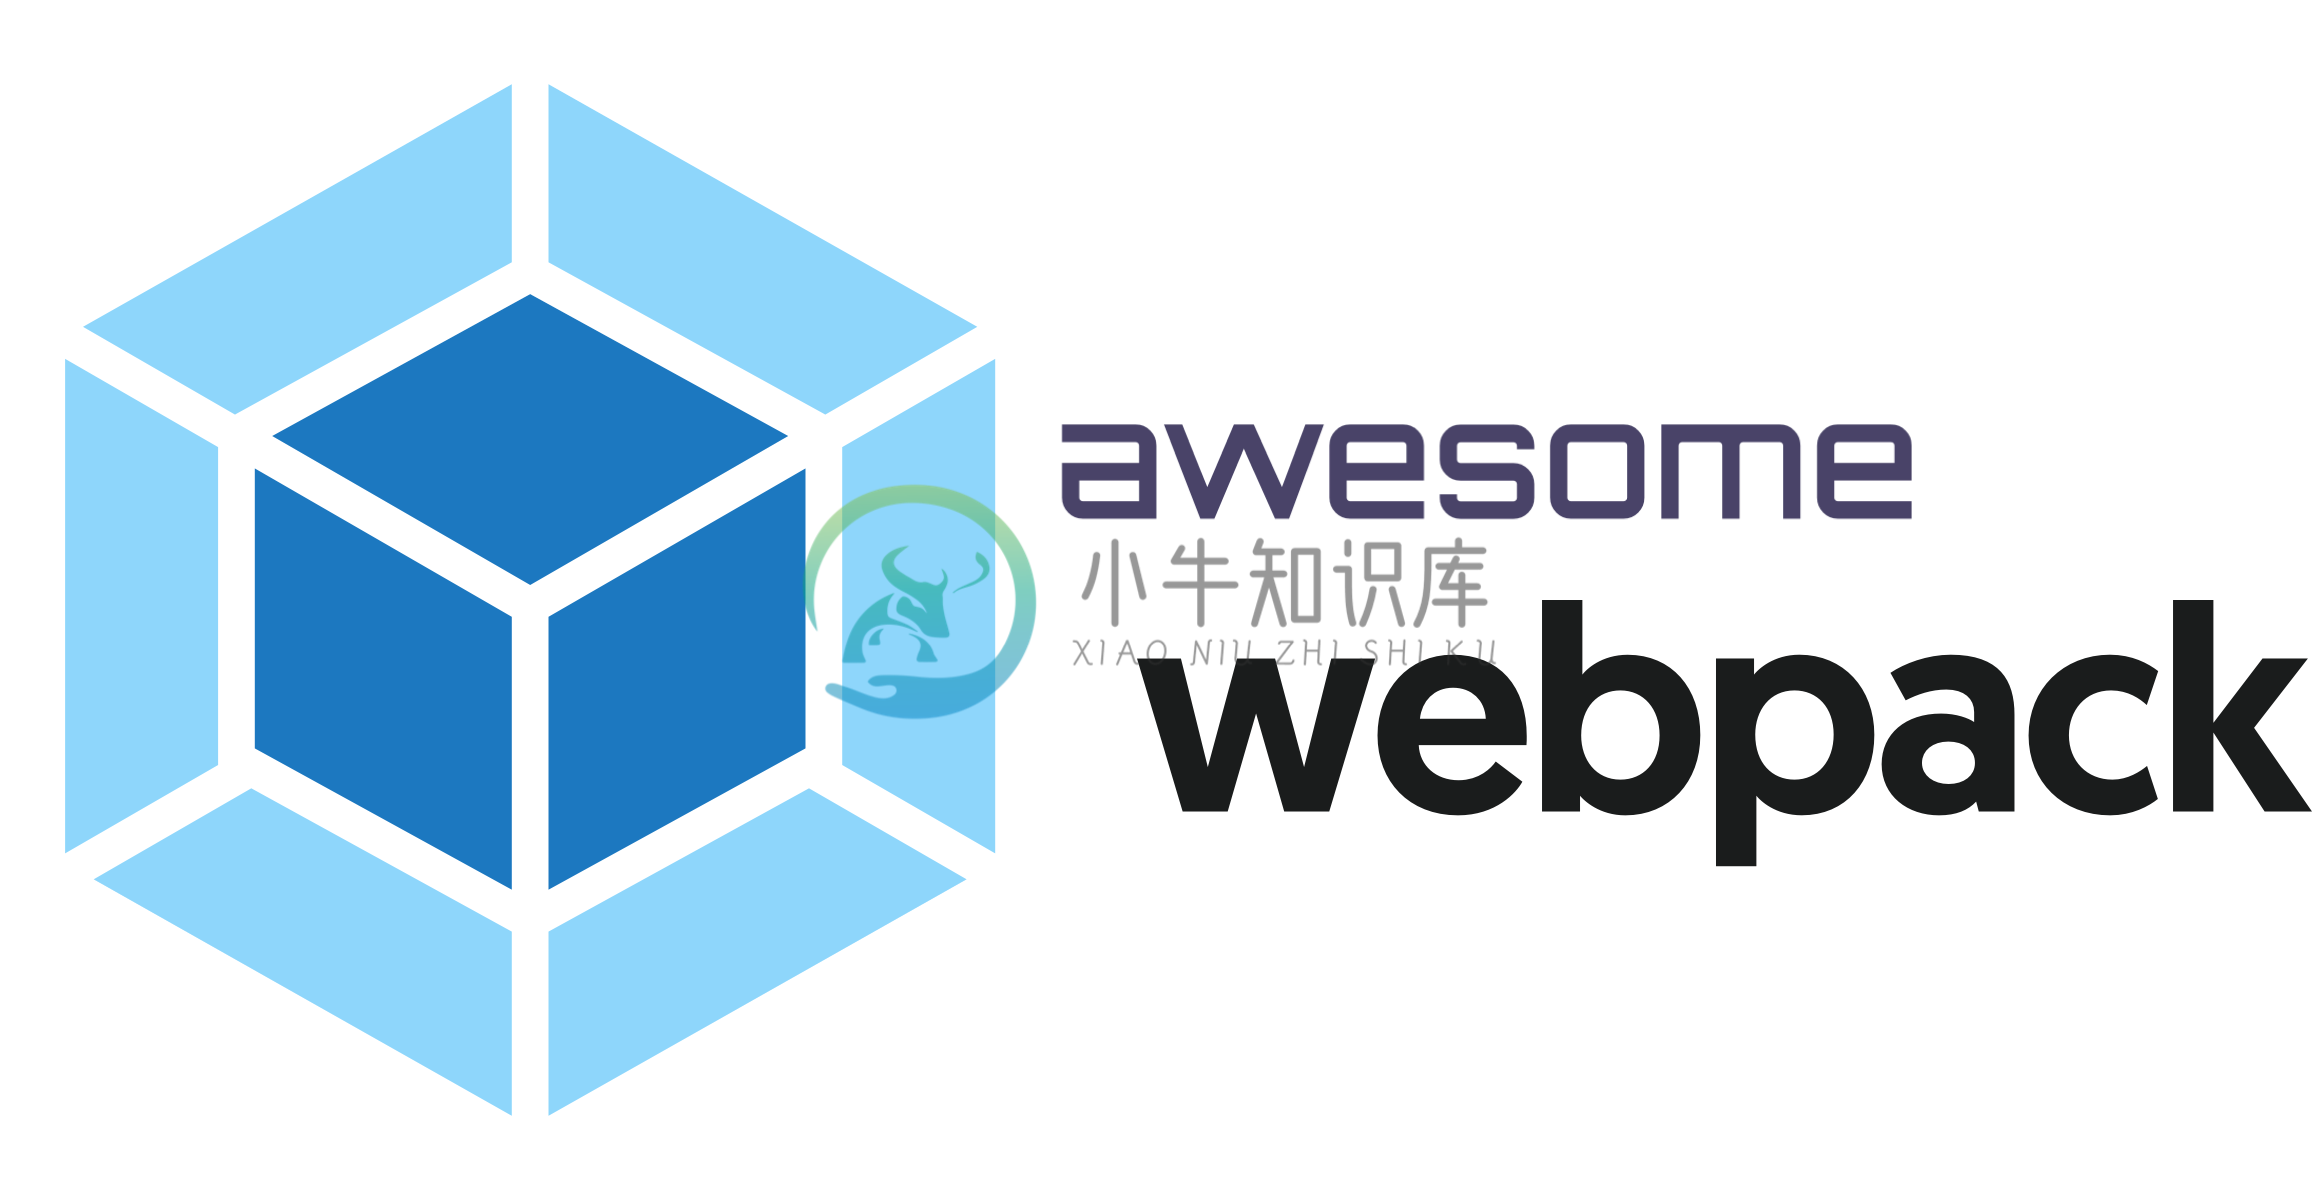 awesome-webpack